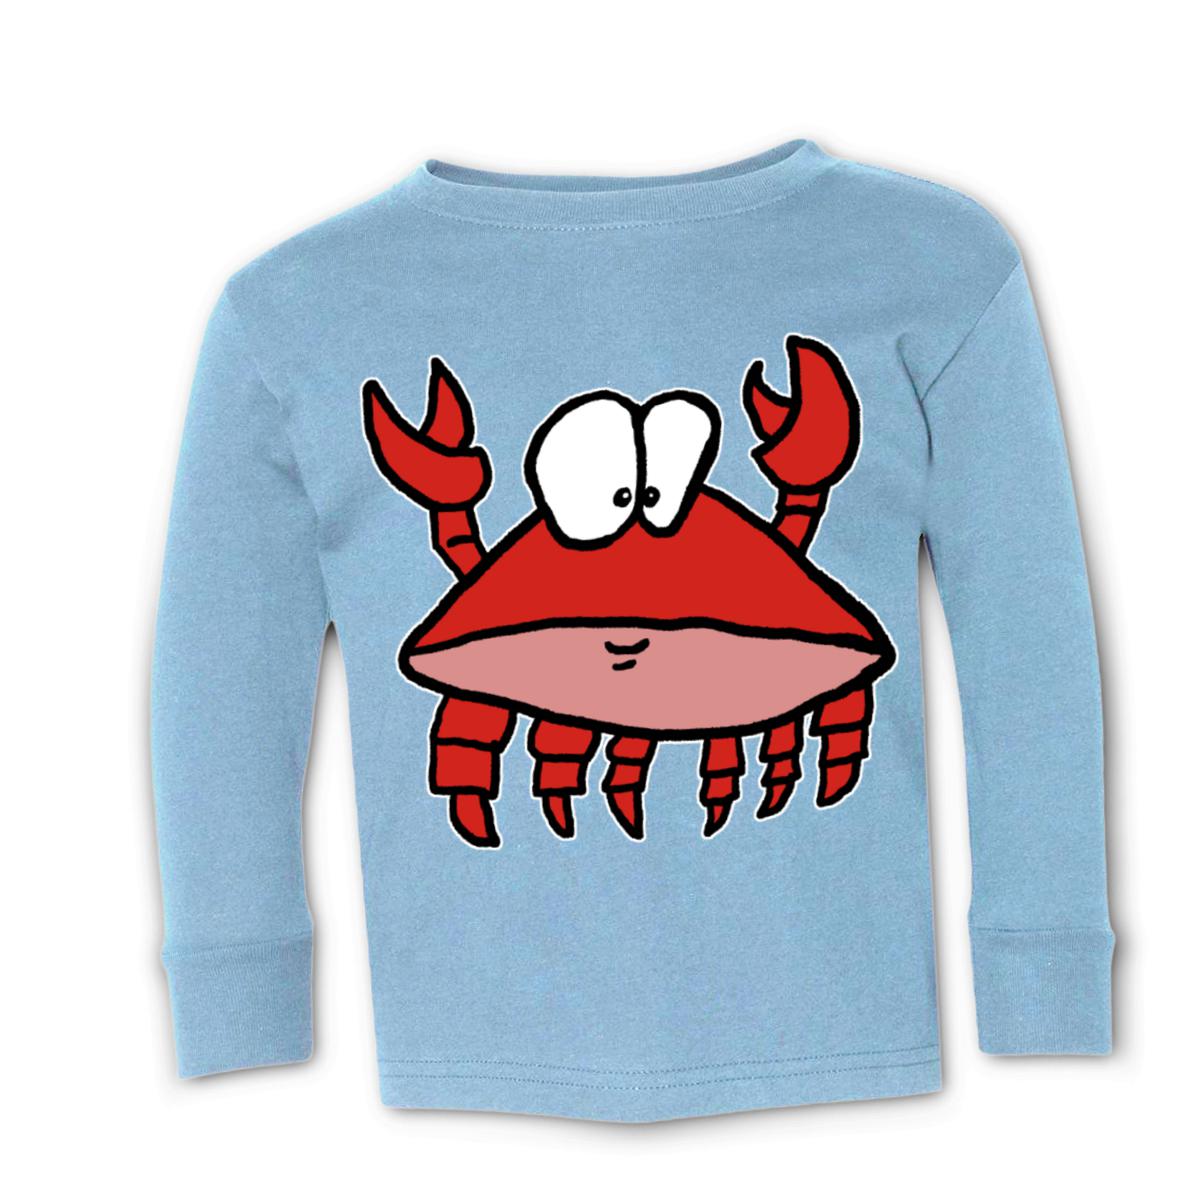 Crab 2.0 Toddler Long Sleeve Tee 2T light-blue